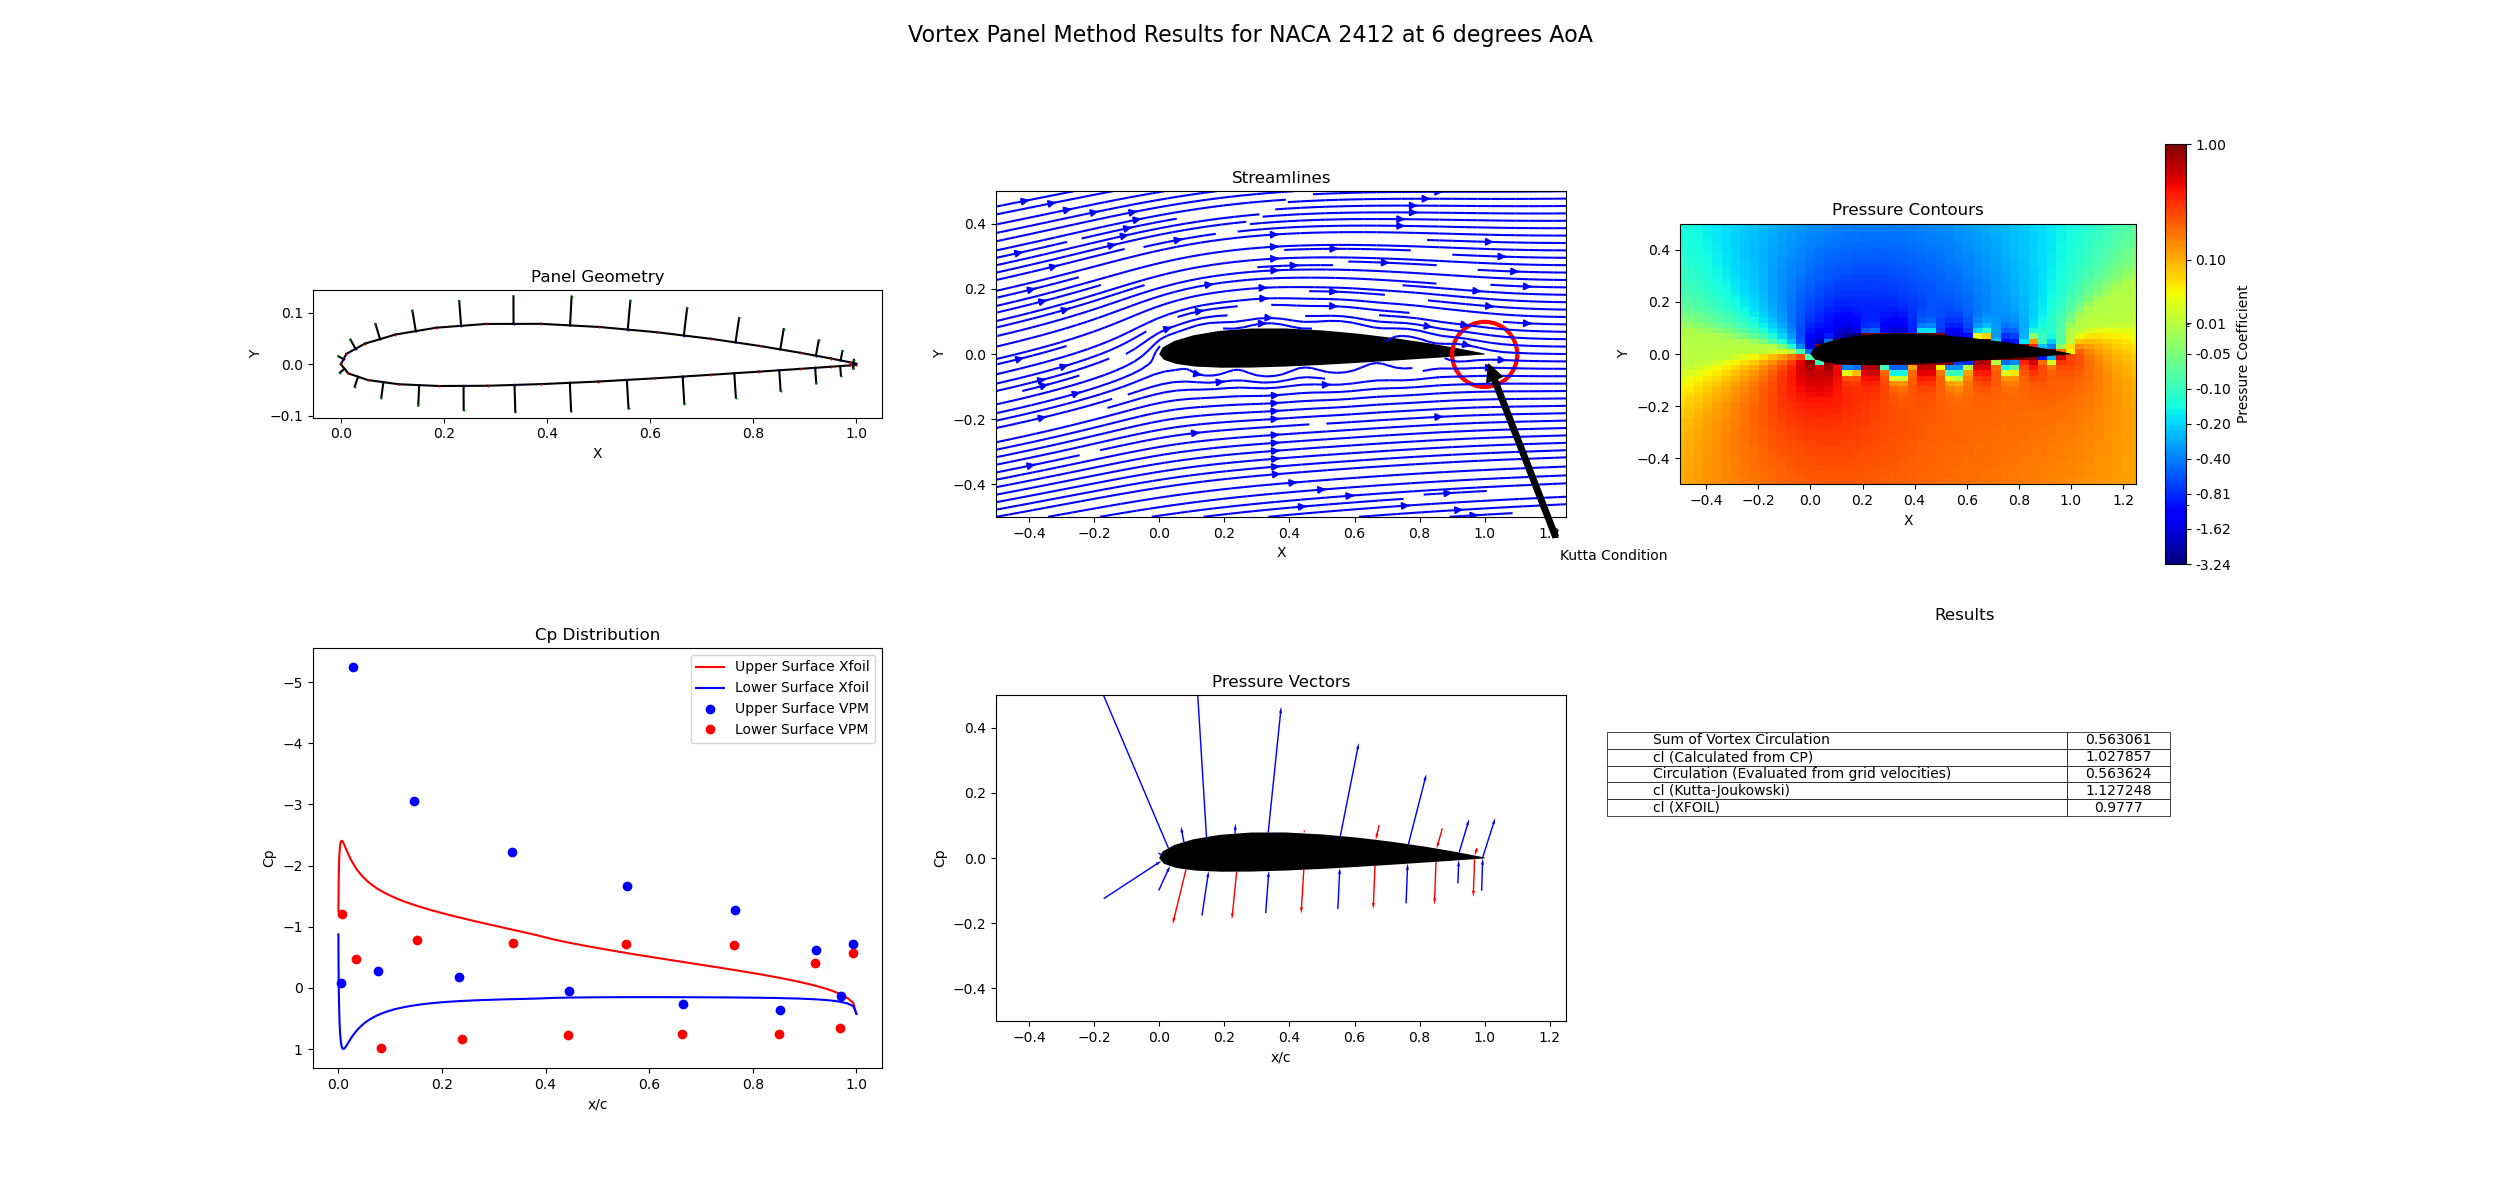 Vortex-Panel-Method-2412-6-deg-AoA-Low-Res.png